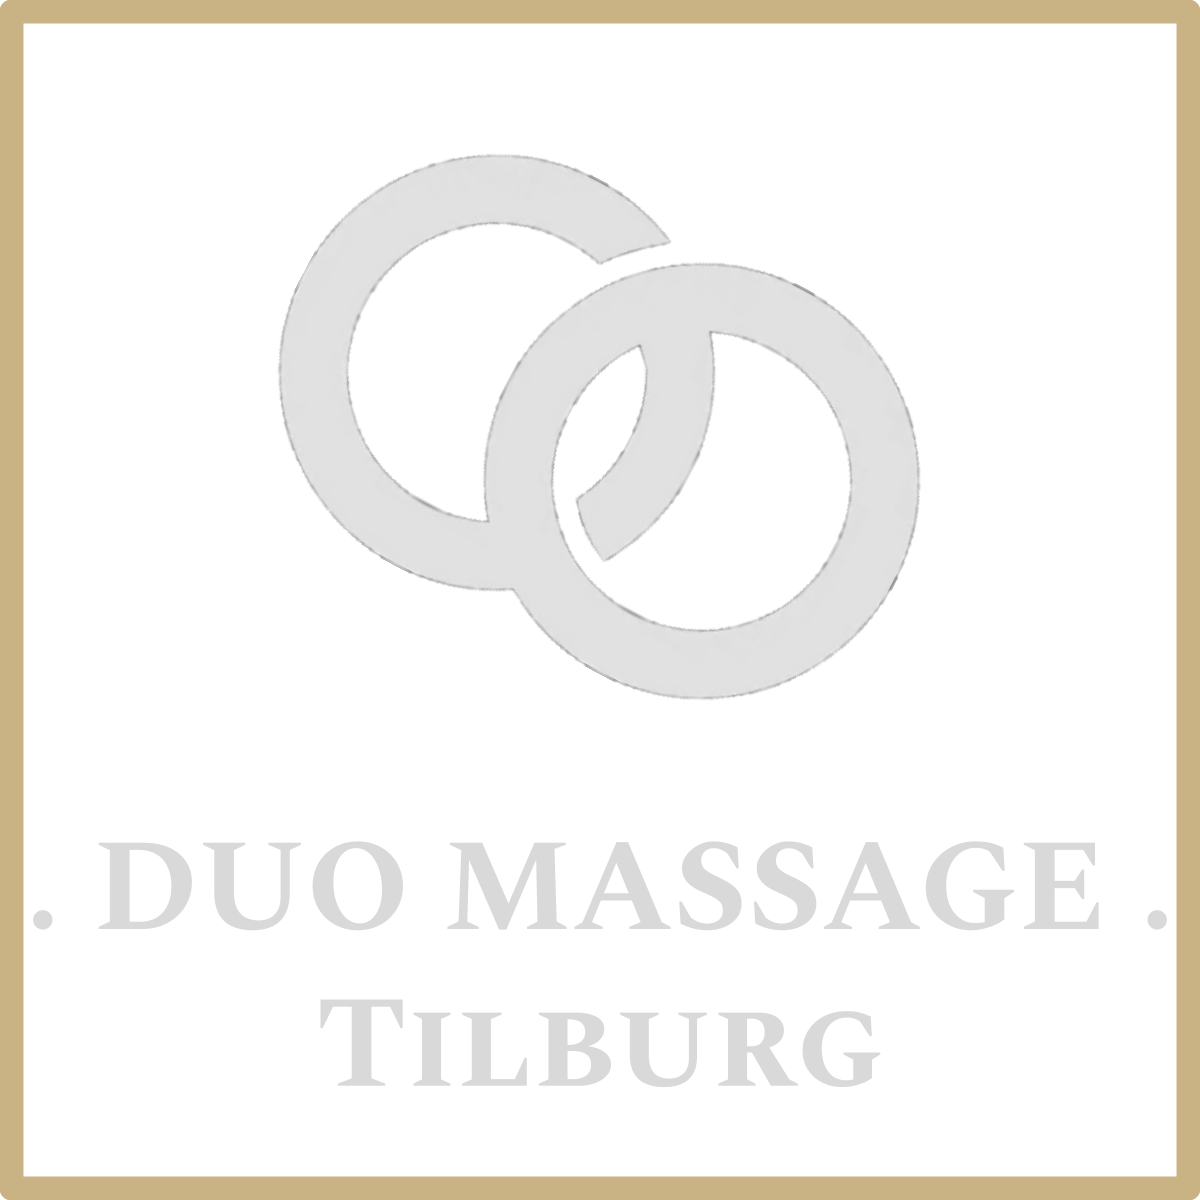 DUO MASSAGE Tilburg - LOGO transparant WIT